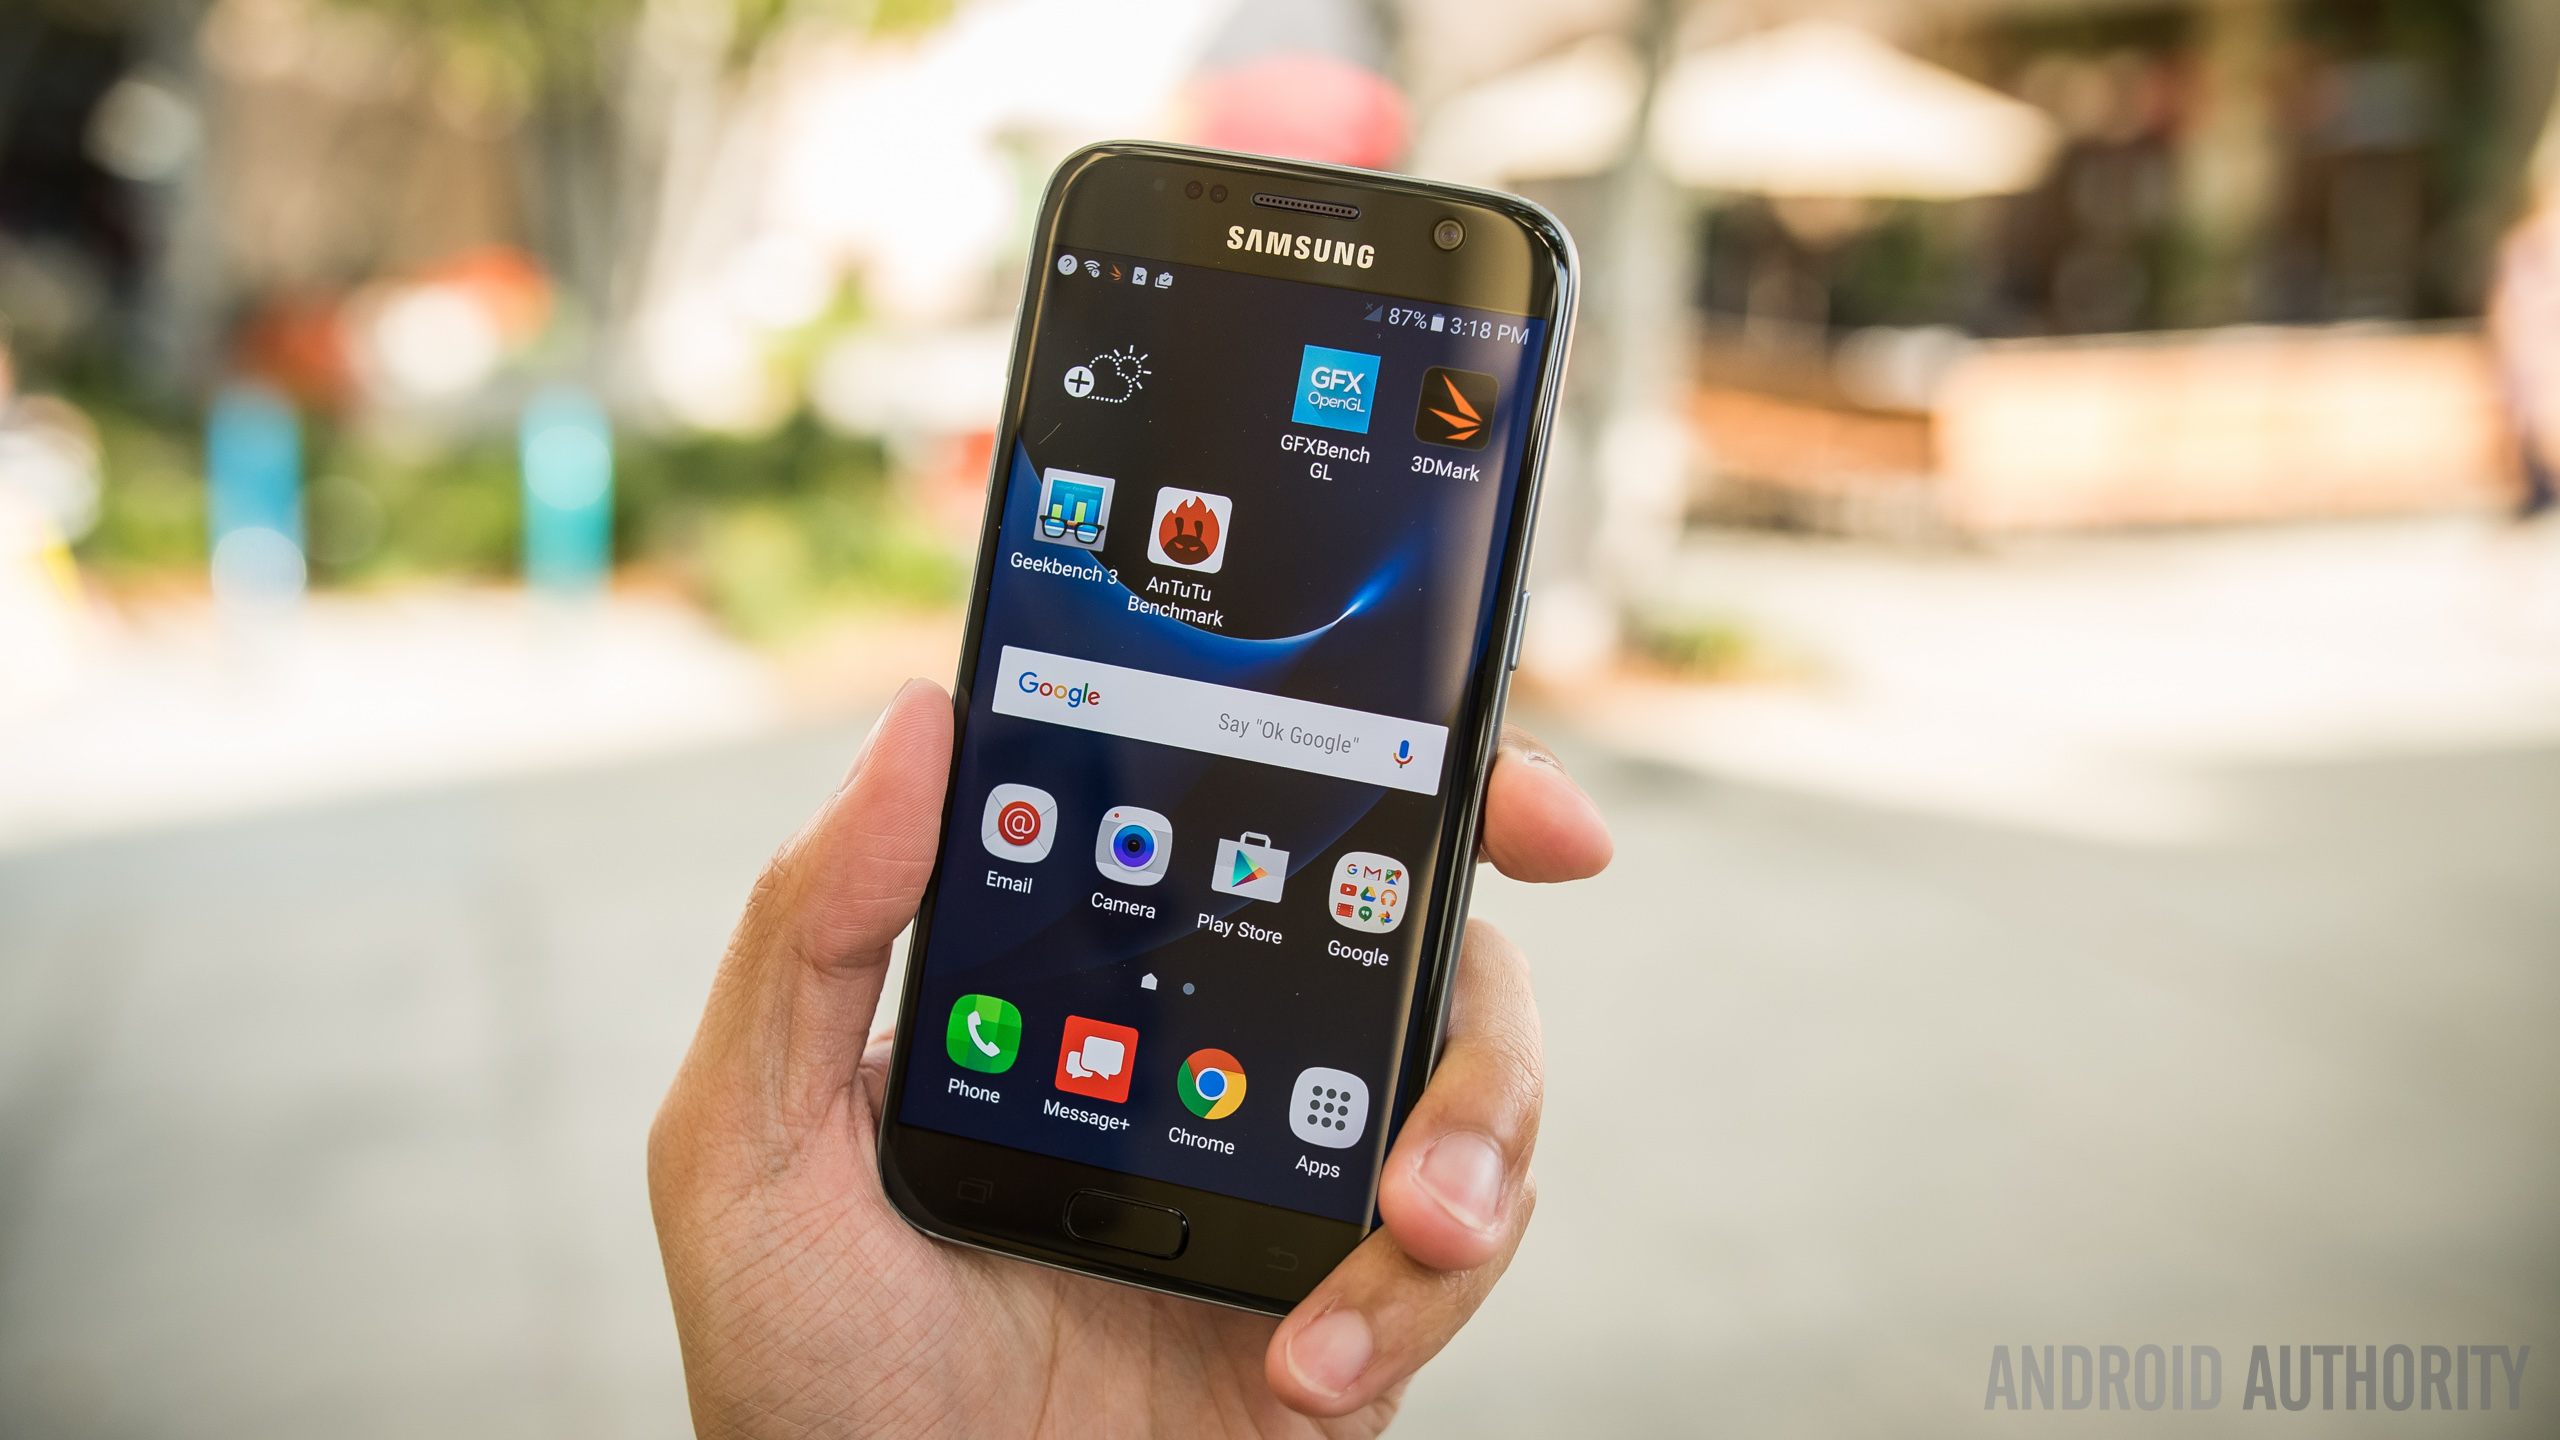 Samsung Galaxy S7 smartphone deals